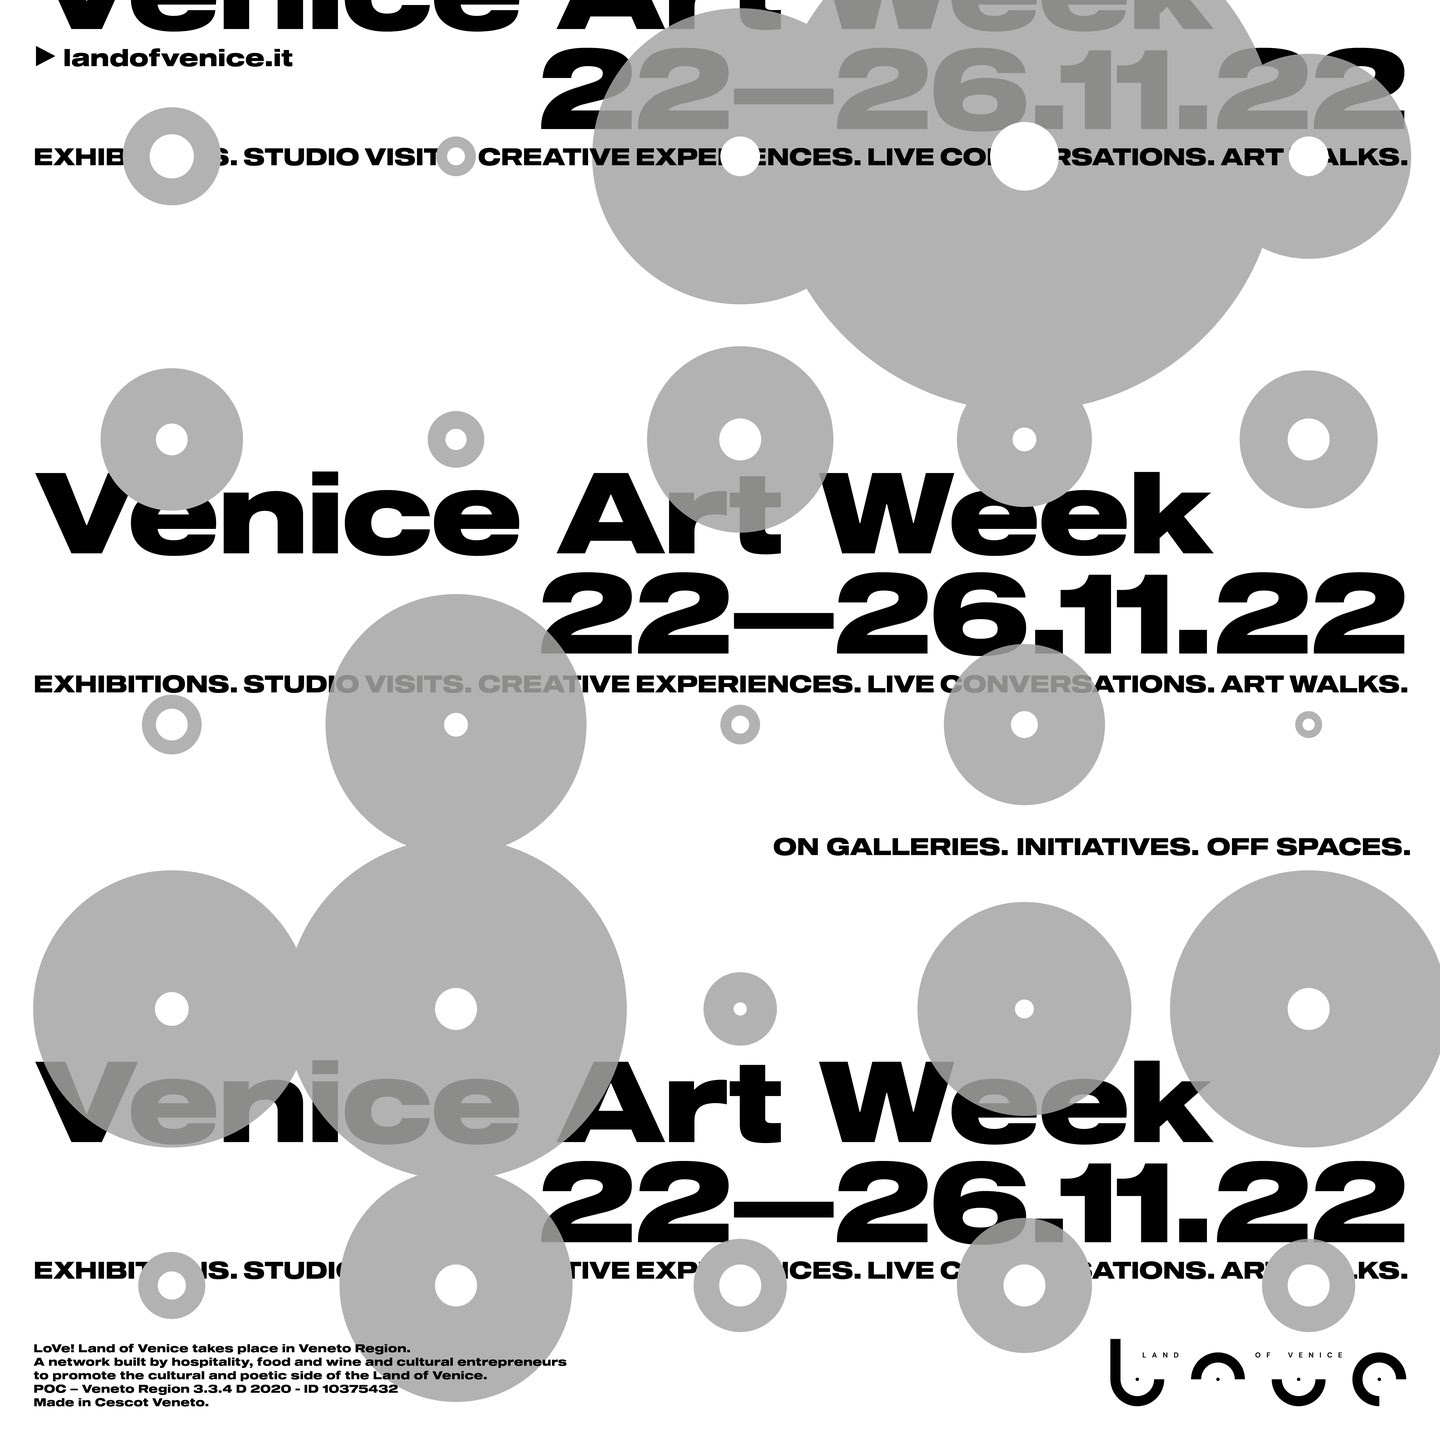 Venice Art Week 22